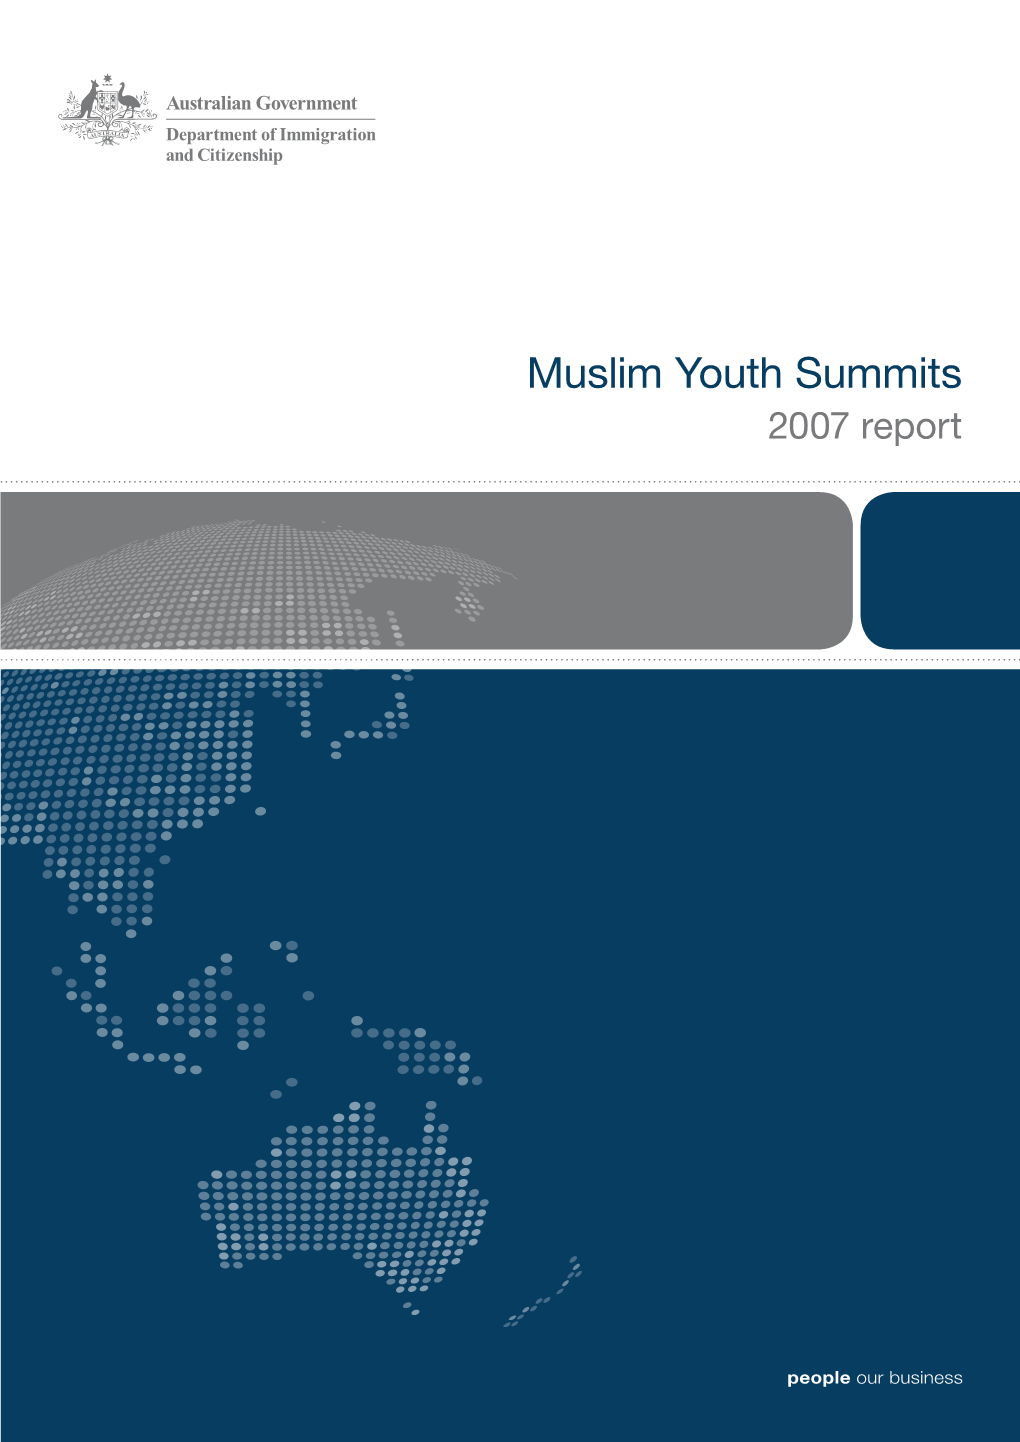 Muslim Youth Summit Report